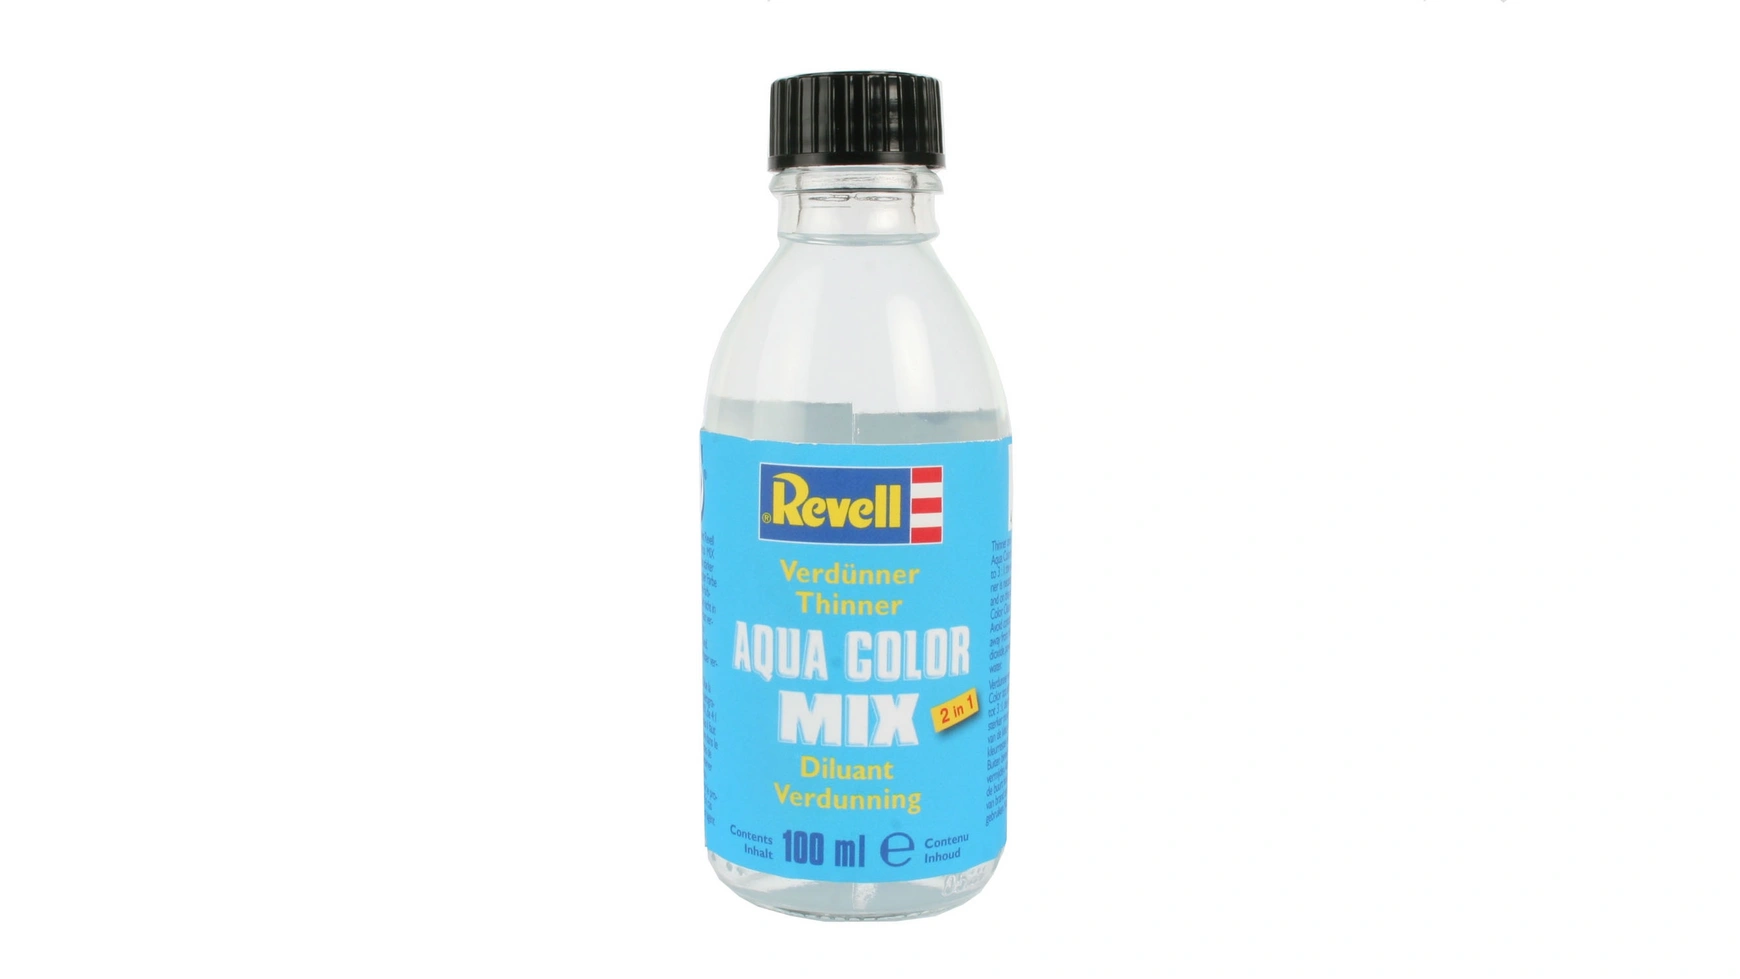 Revell Цветная смесь Aqua, 100 мл цена и фото